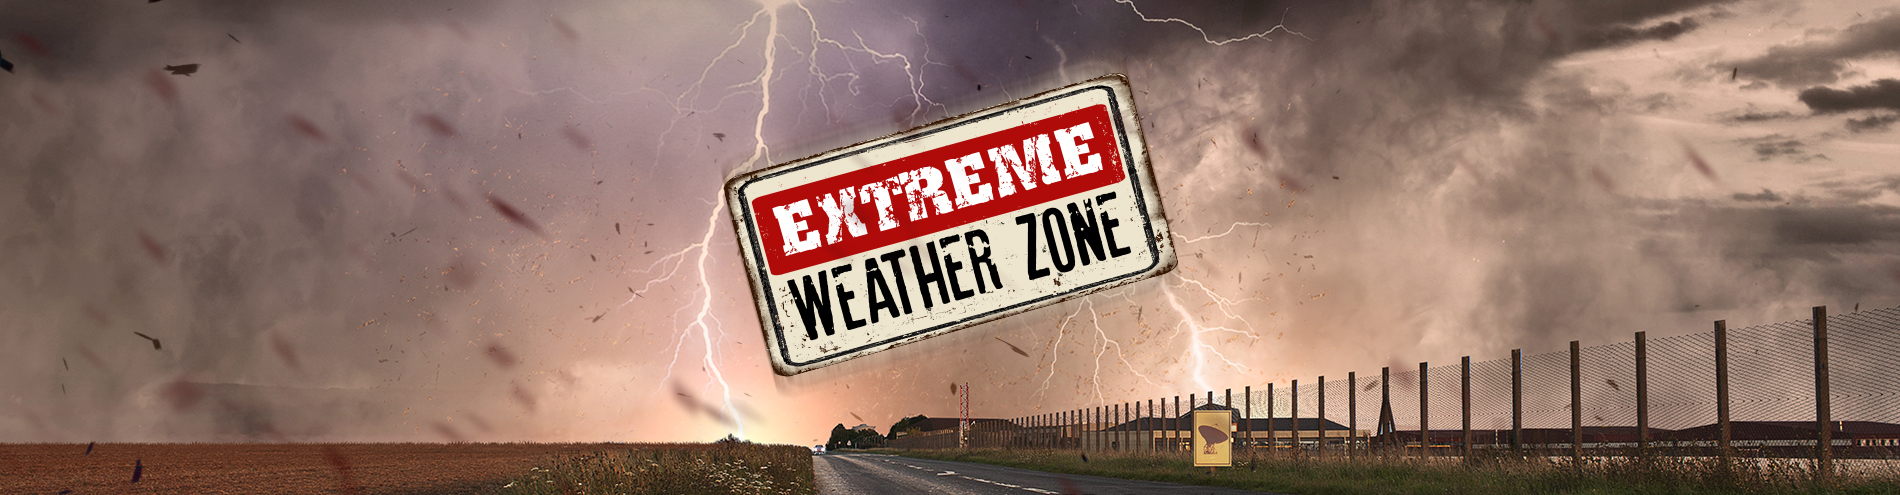 Extreme Weather Zone Header